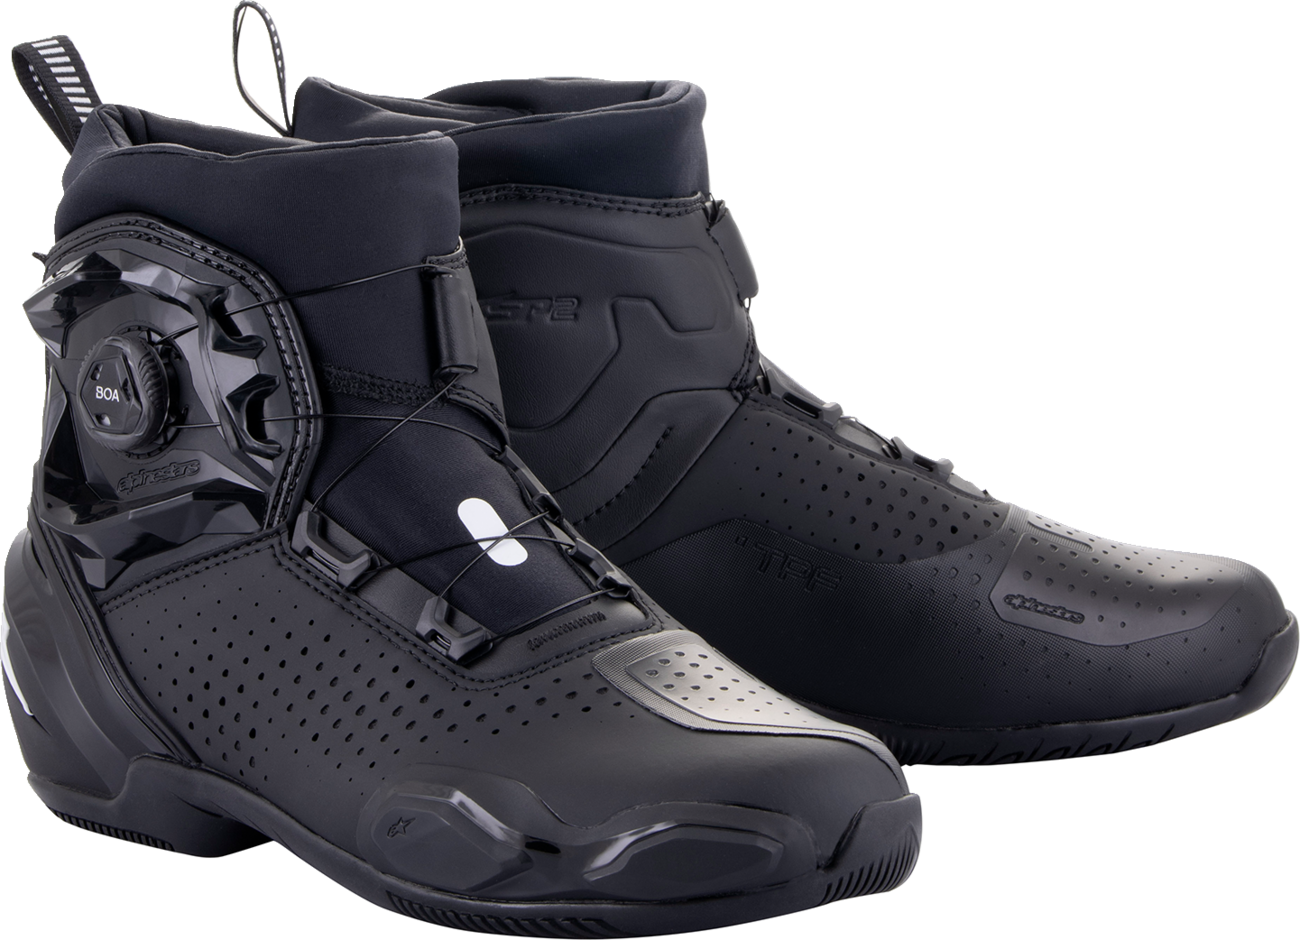 ALPINESTARS SP-2 Shoes - Black - US 8 / EU 42 2511622-10-42